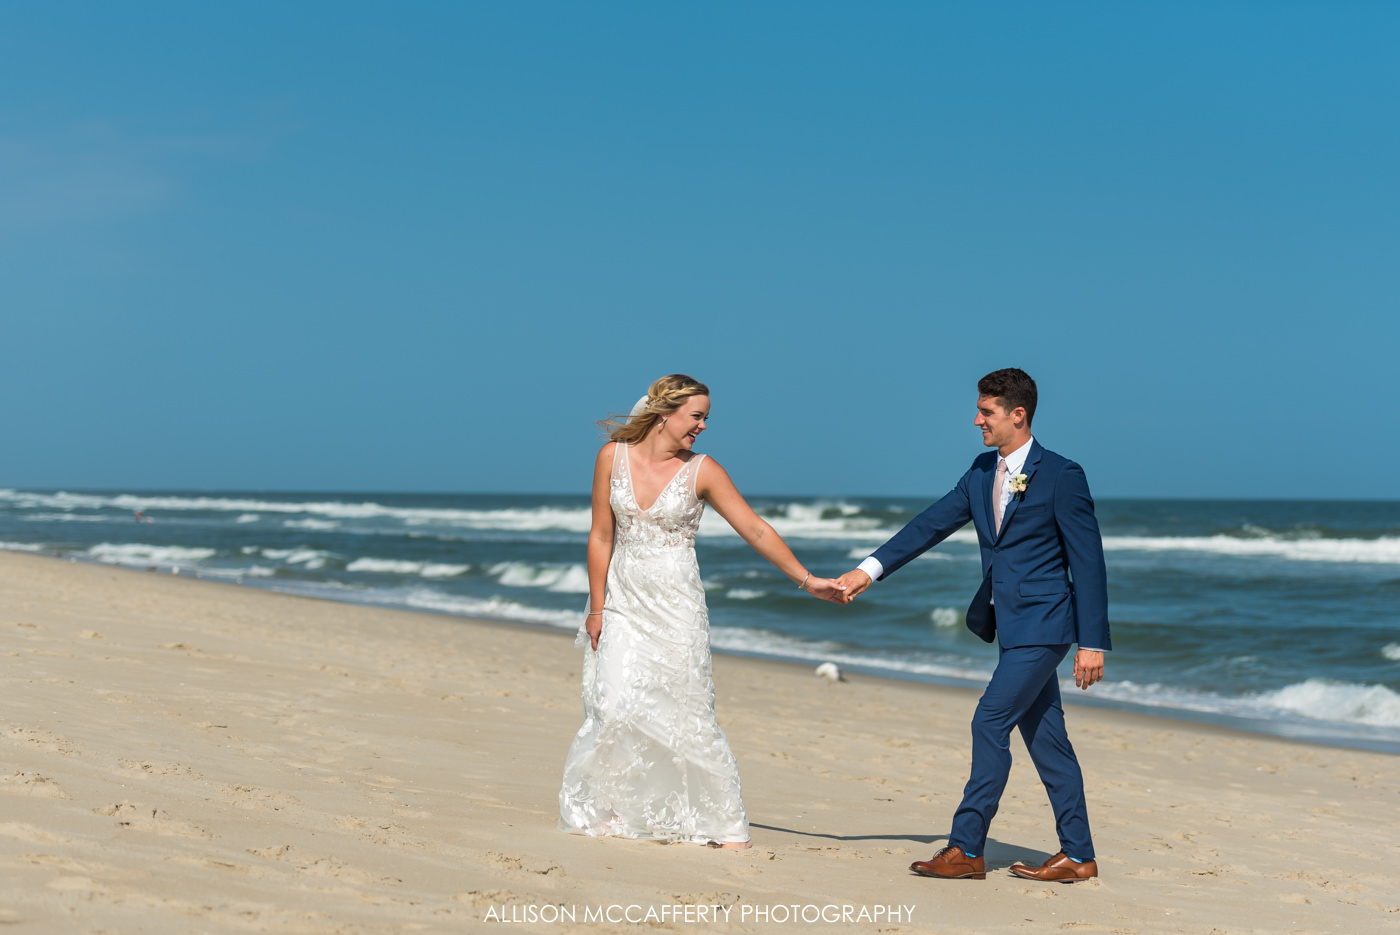 Bride leading groom up the beach in Beach Haven, NJ